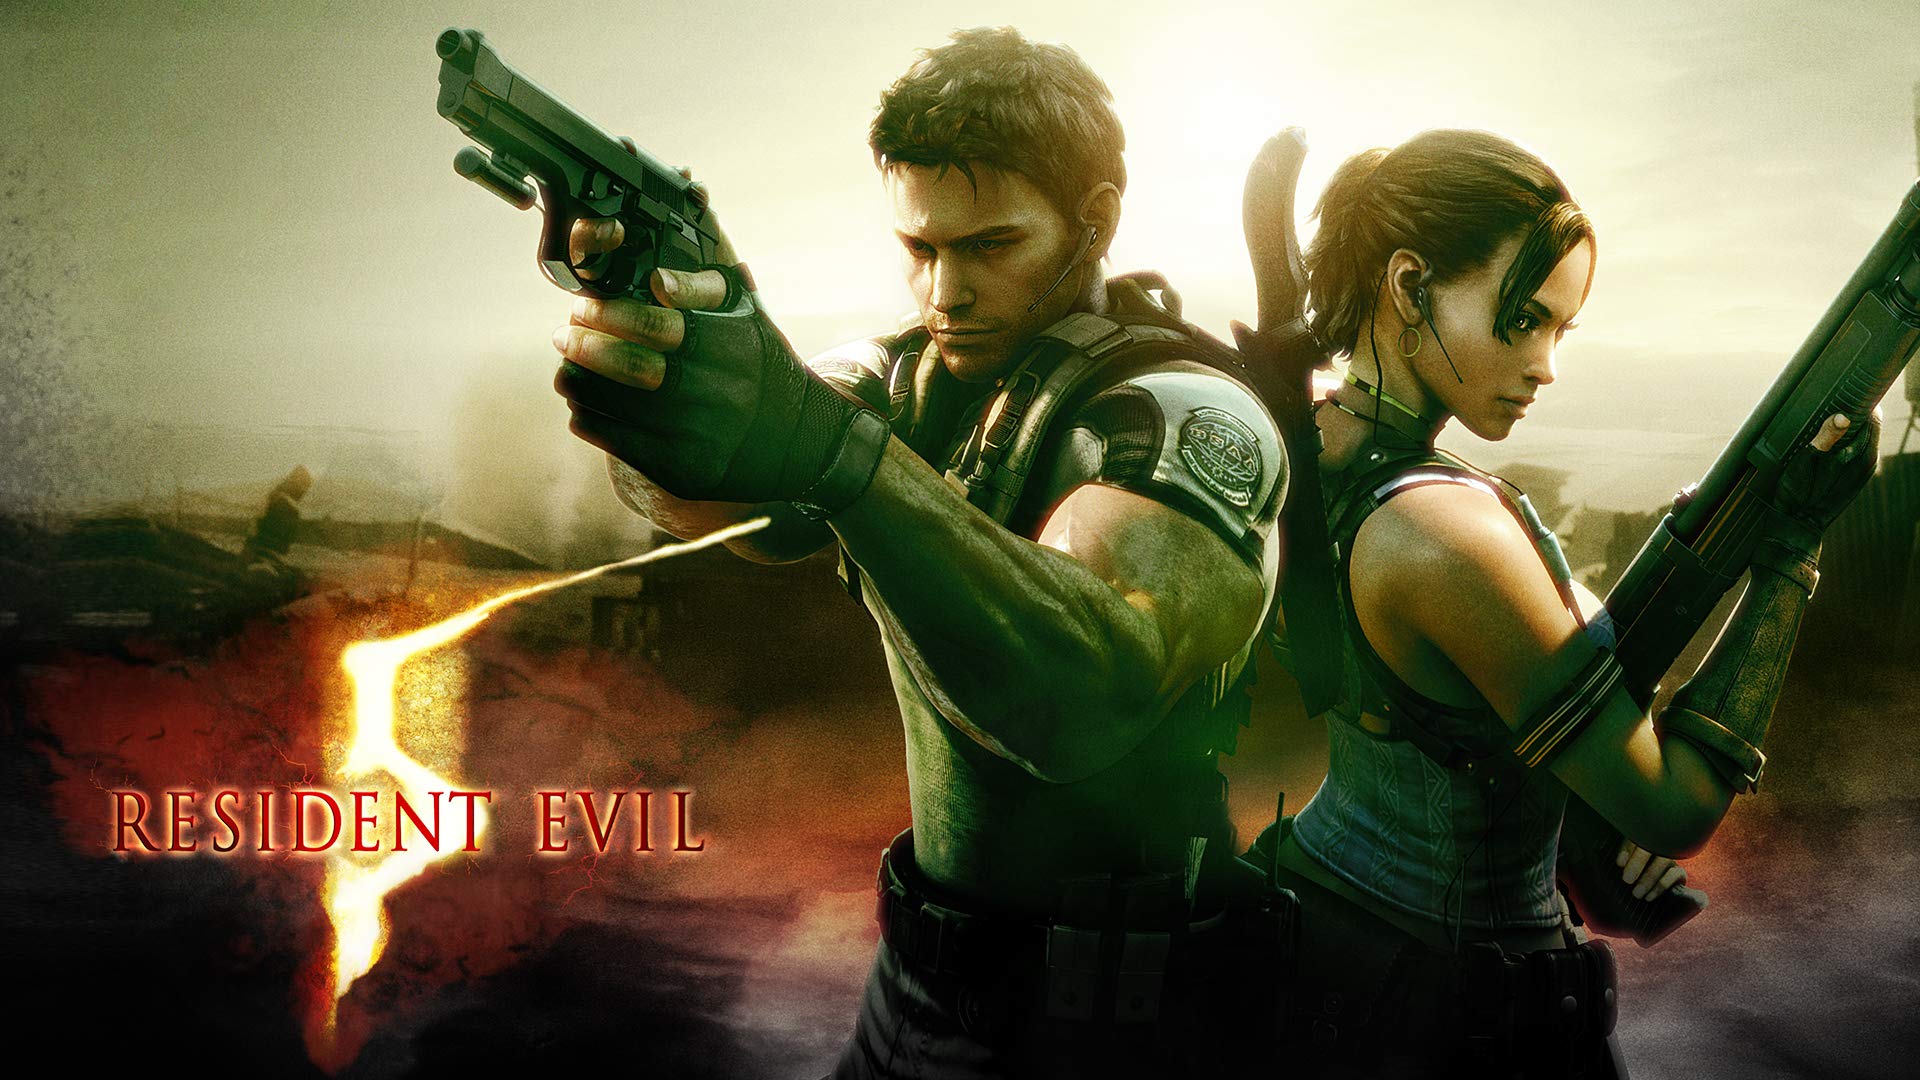 Resident evil 5 pc cd key generator v2 0 free download